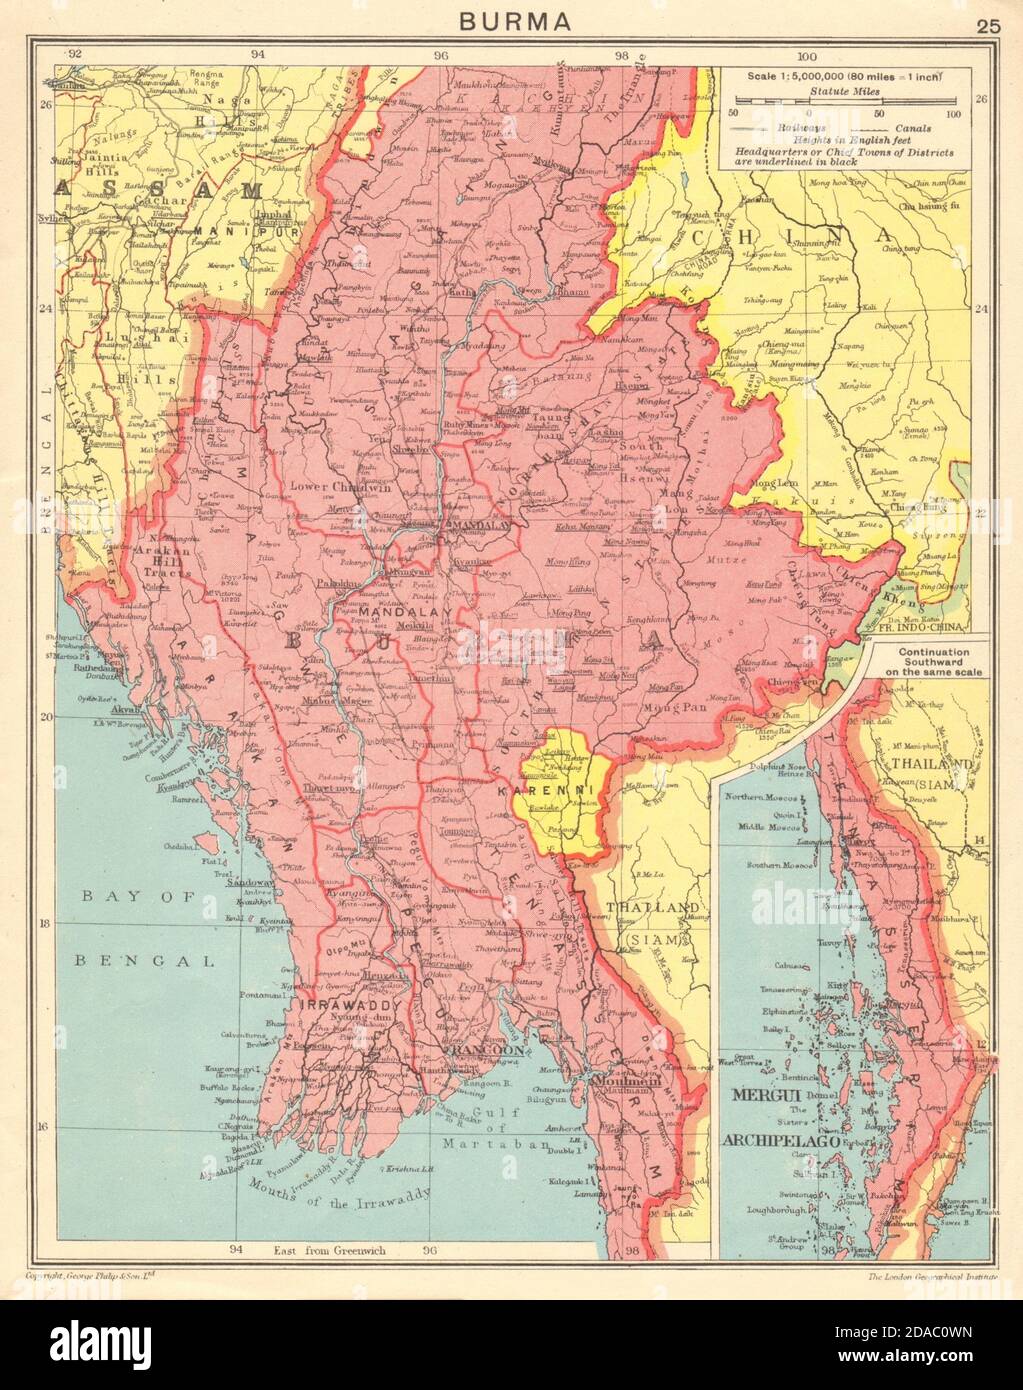 SECOND WORLD WAR. Burma Myanmar 1943 old vintage map plan chart Stock Photo